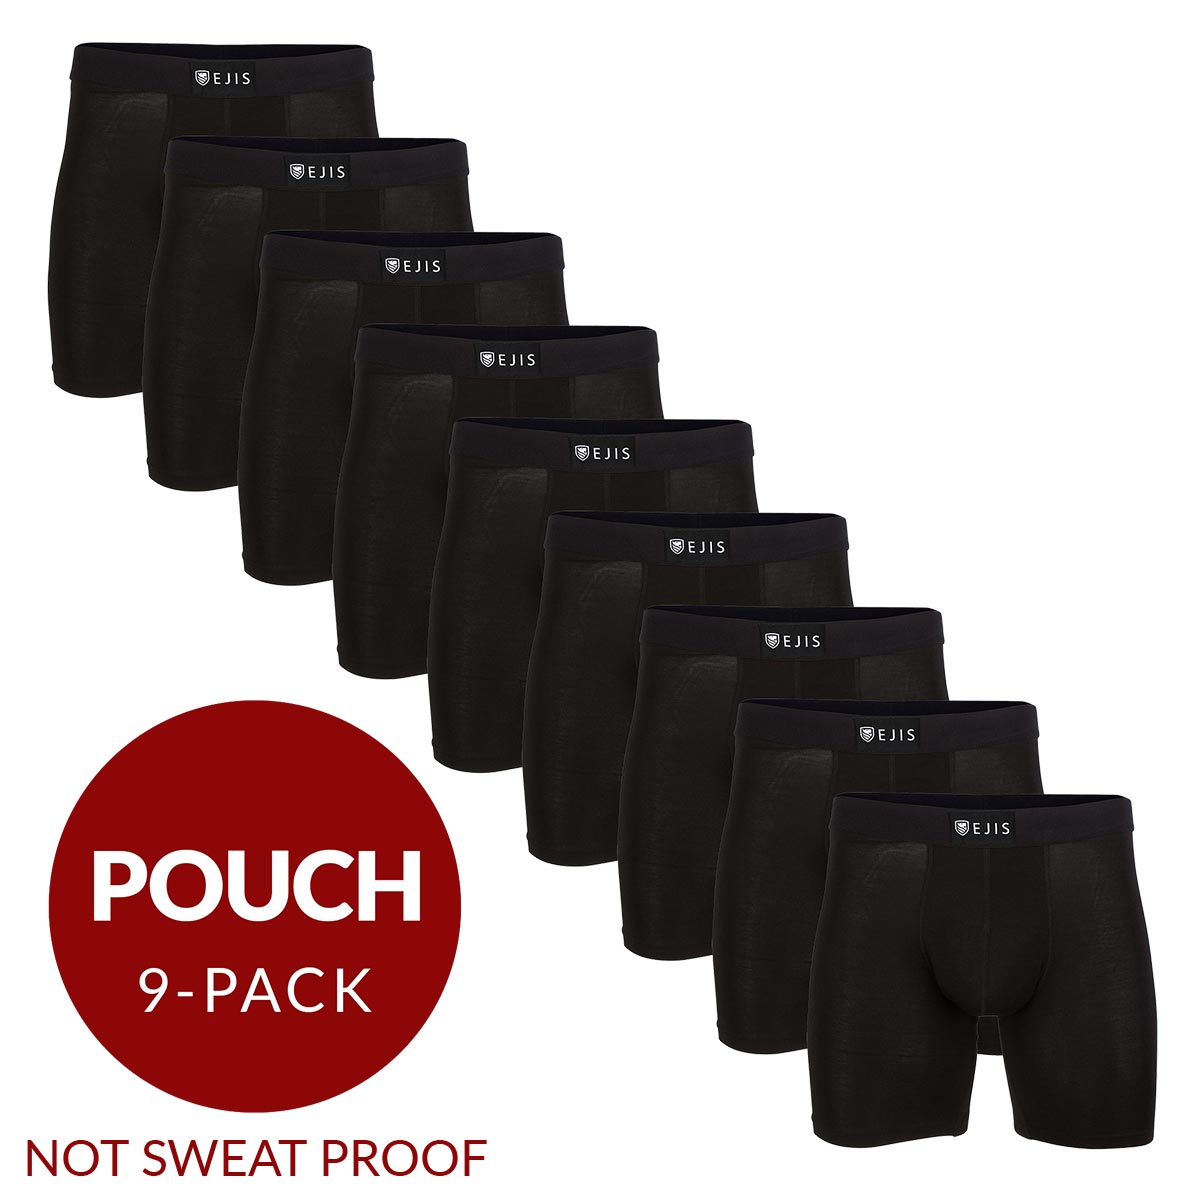 Ejis Sweatproof Mens Boxer Briefs Modal Pouch Underwear w